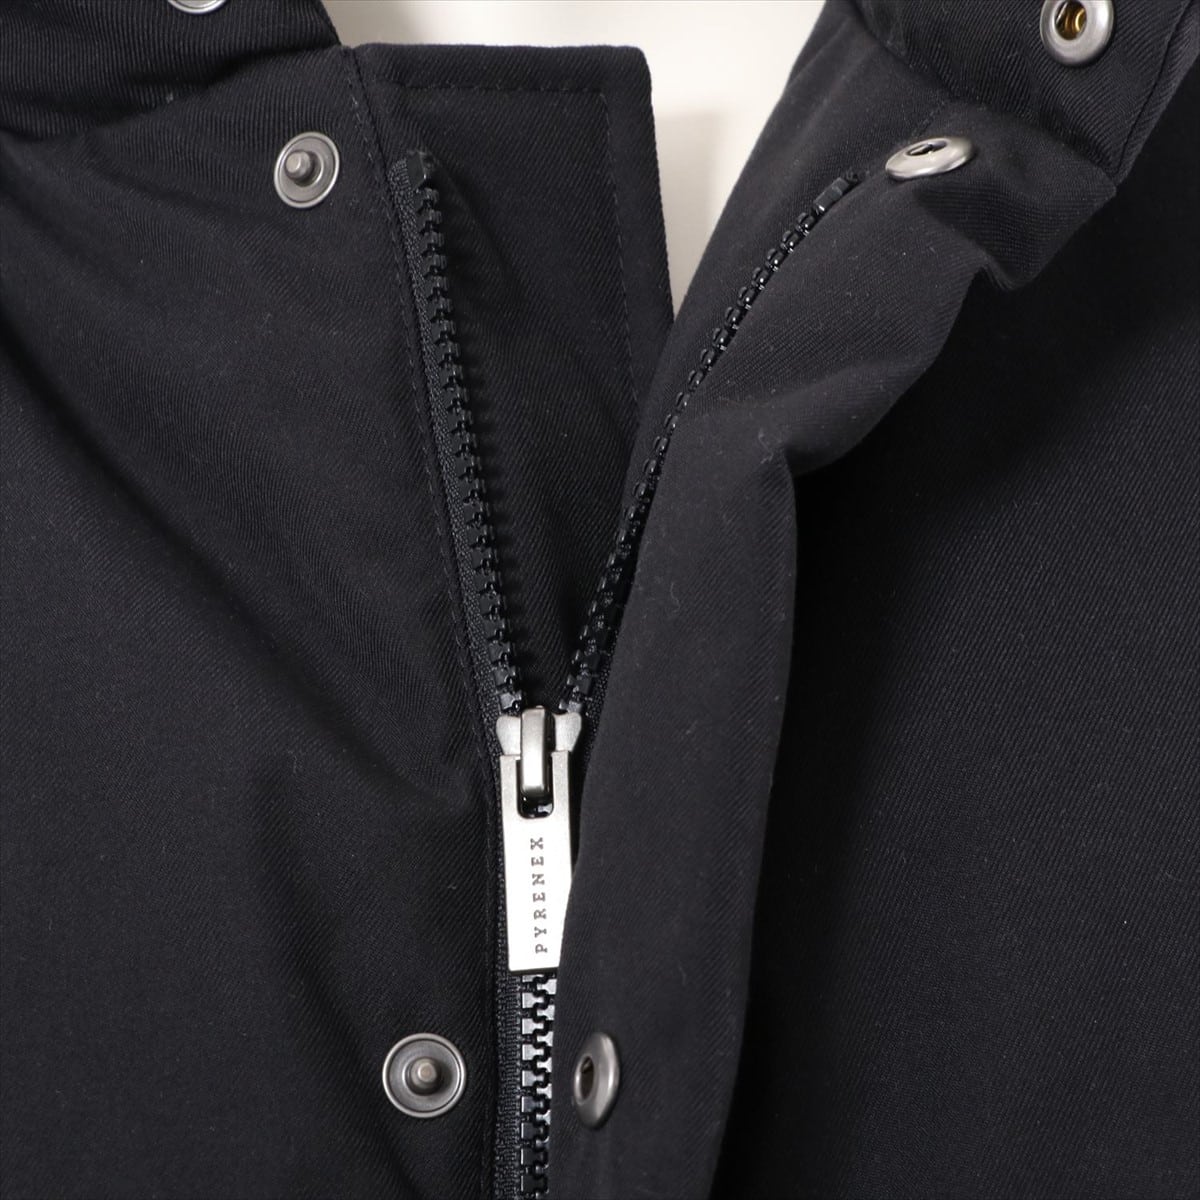 Pyrenex Polyester Down jacket M Men's Black SAINT JEAN DE LUZ JACKET